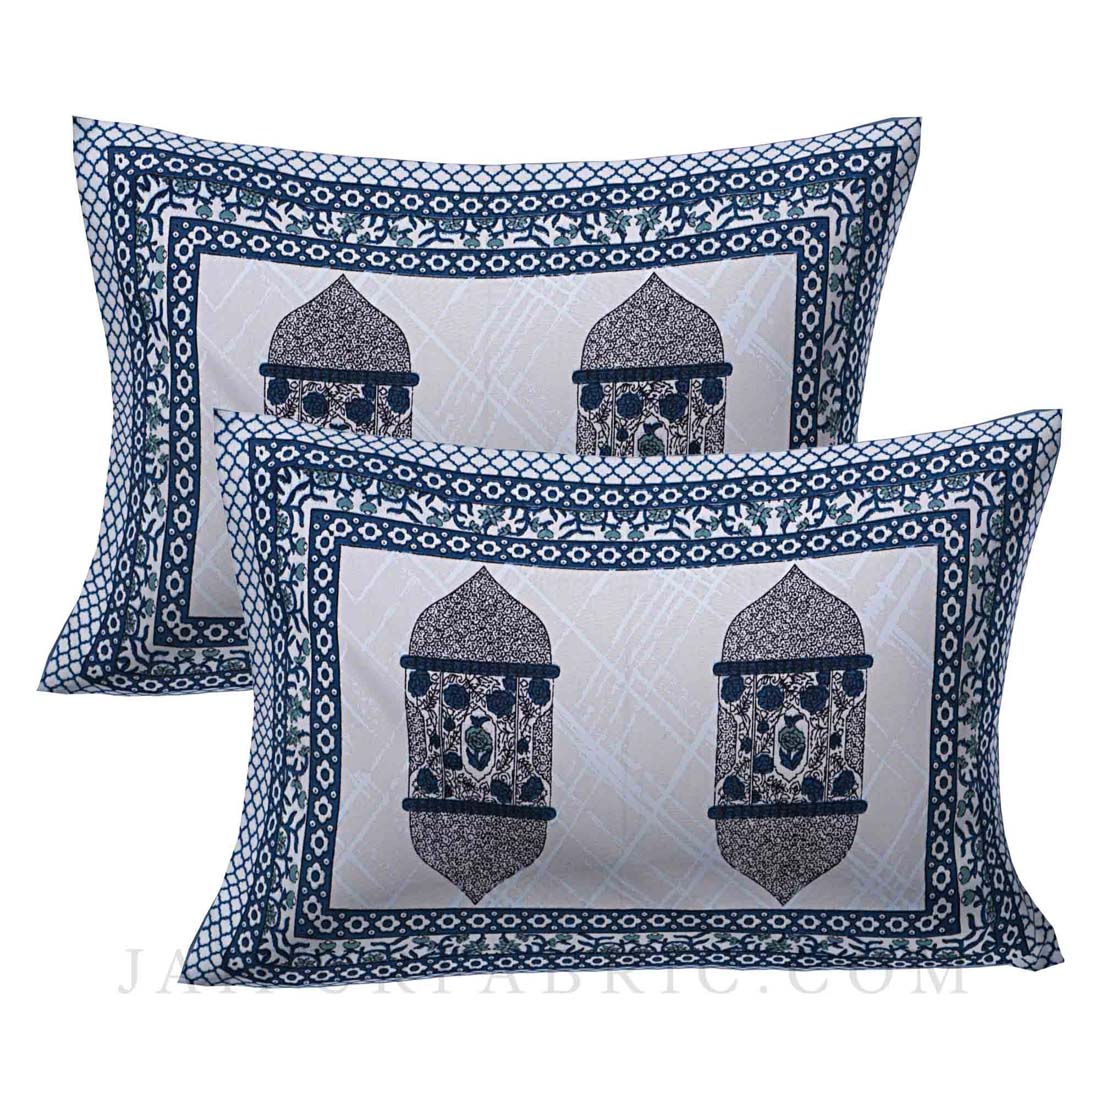 The Hawa Mahal Jharokha Blue Cotton Double Bedsheet